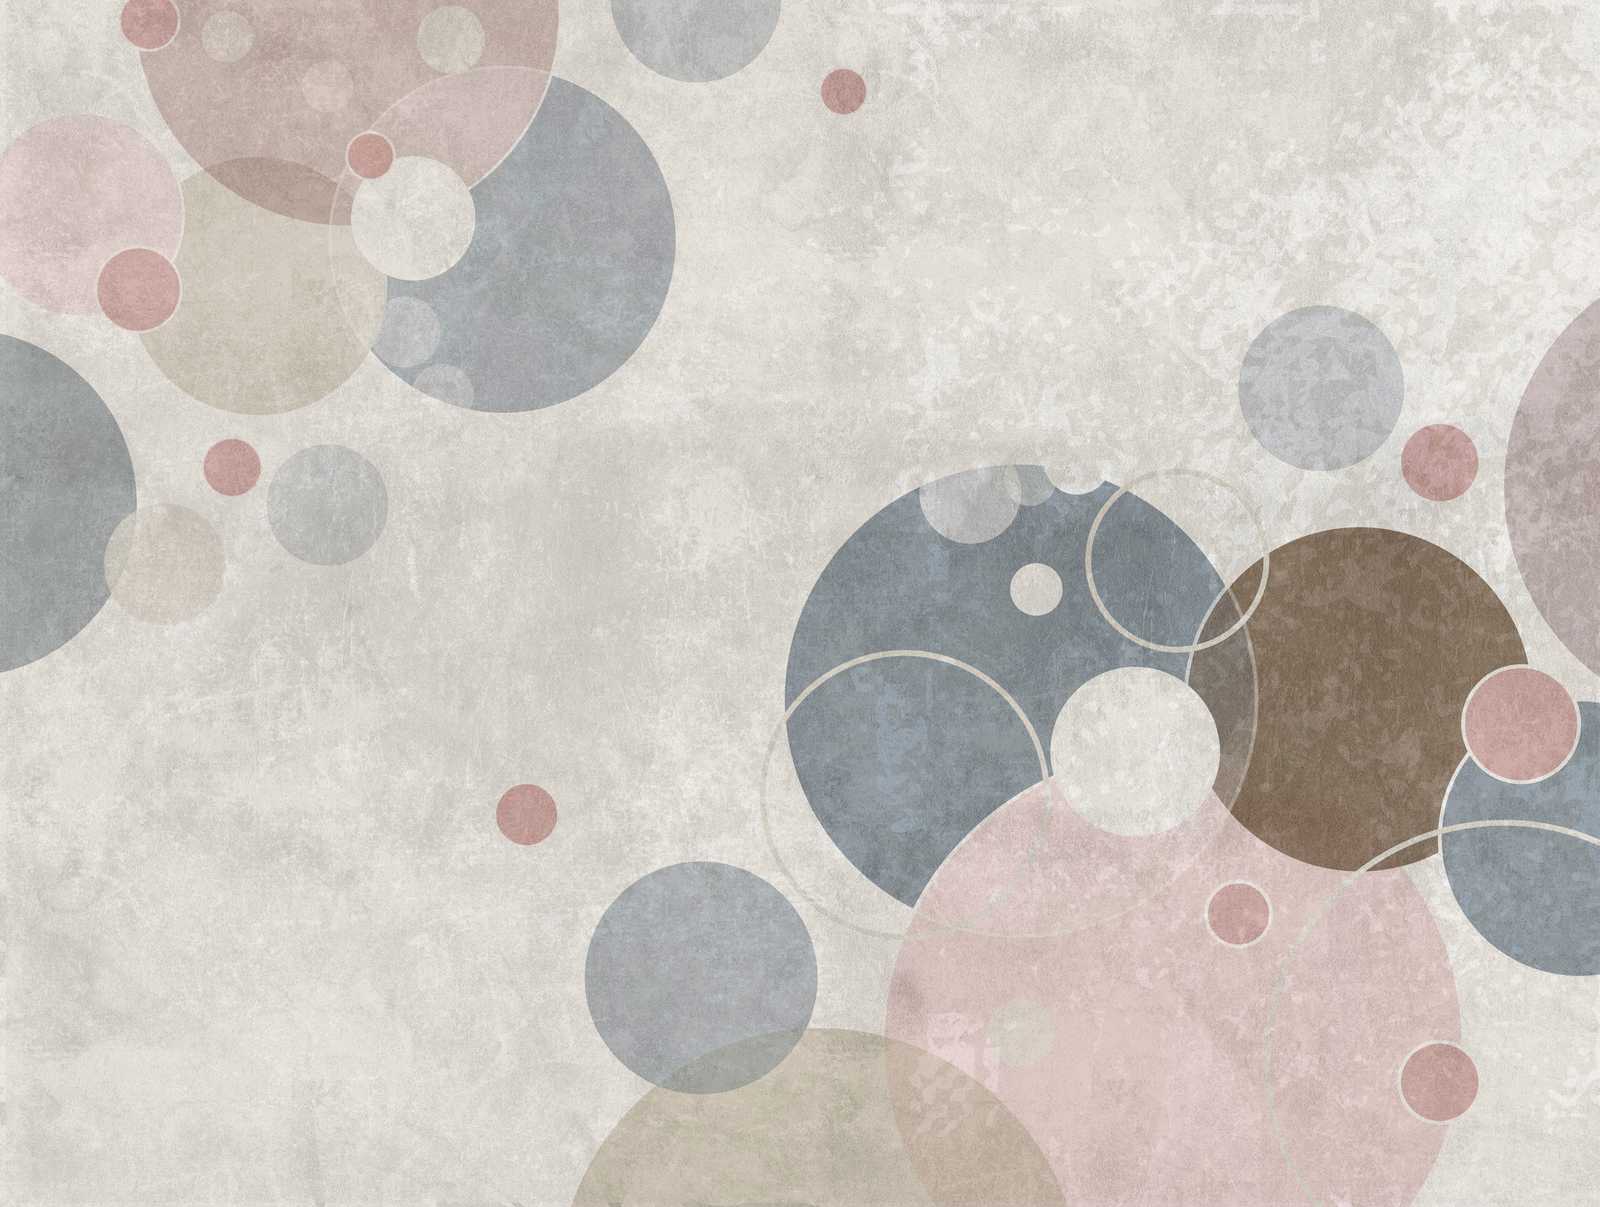             behang nieuwigheid - motief behang cirkel patroon abstract in modern design
        